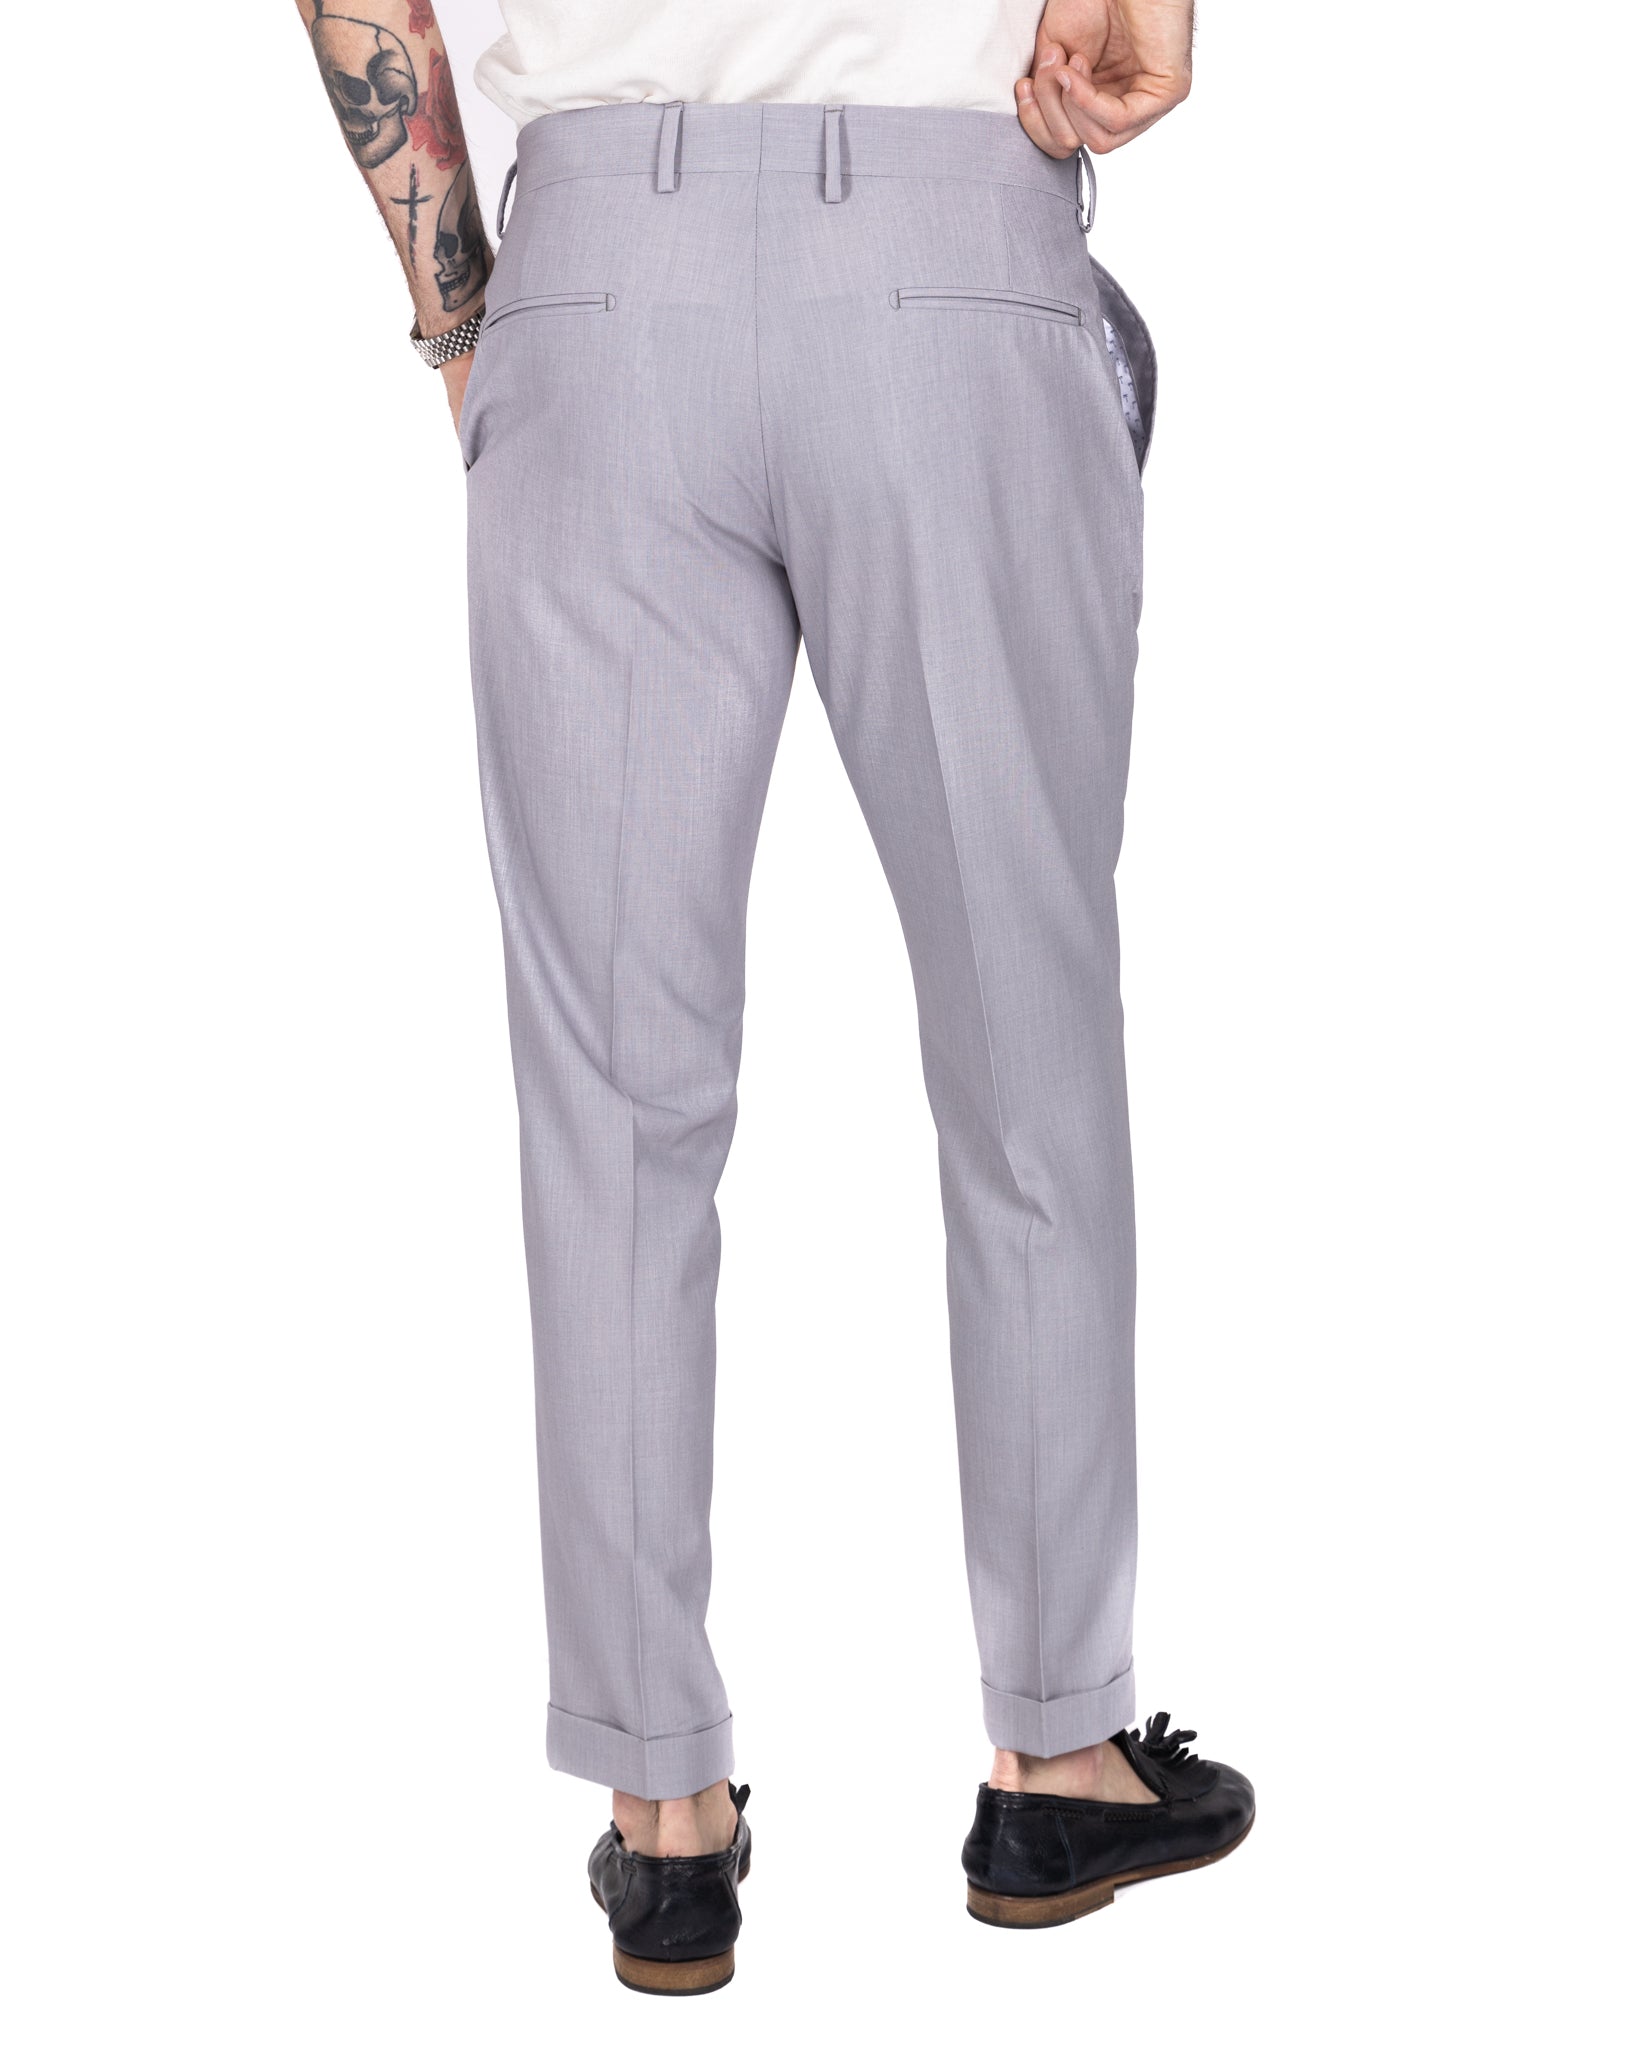 Milano - light gray basic trousers